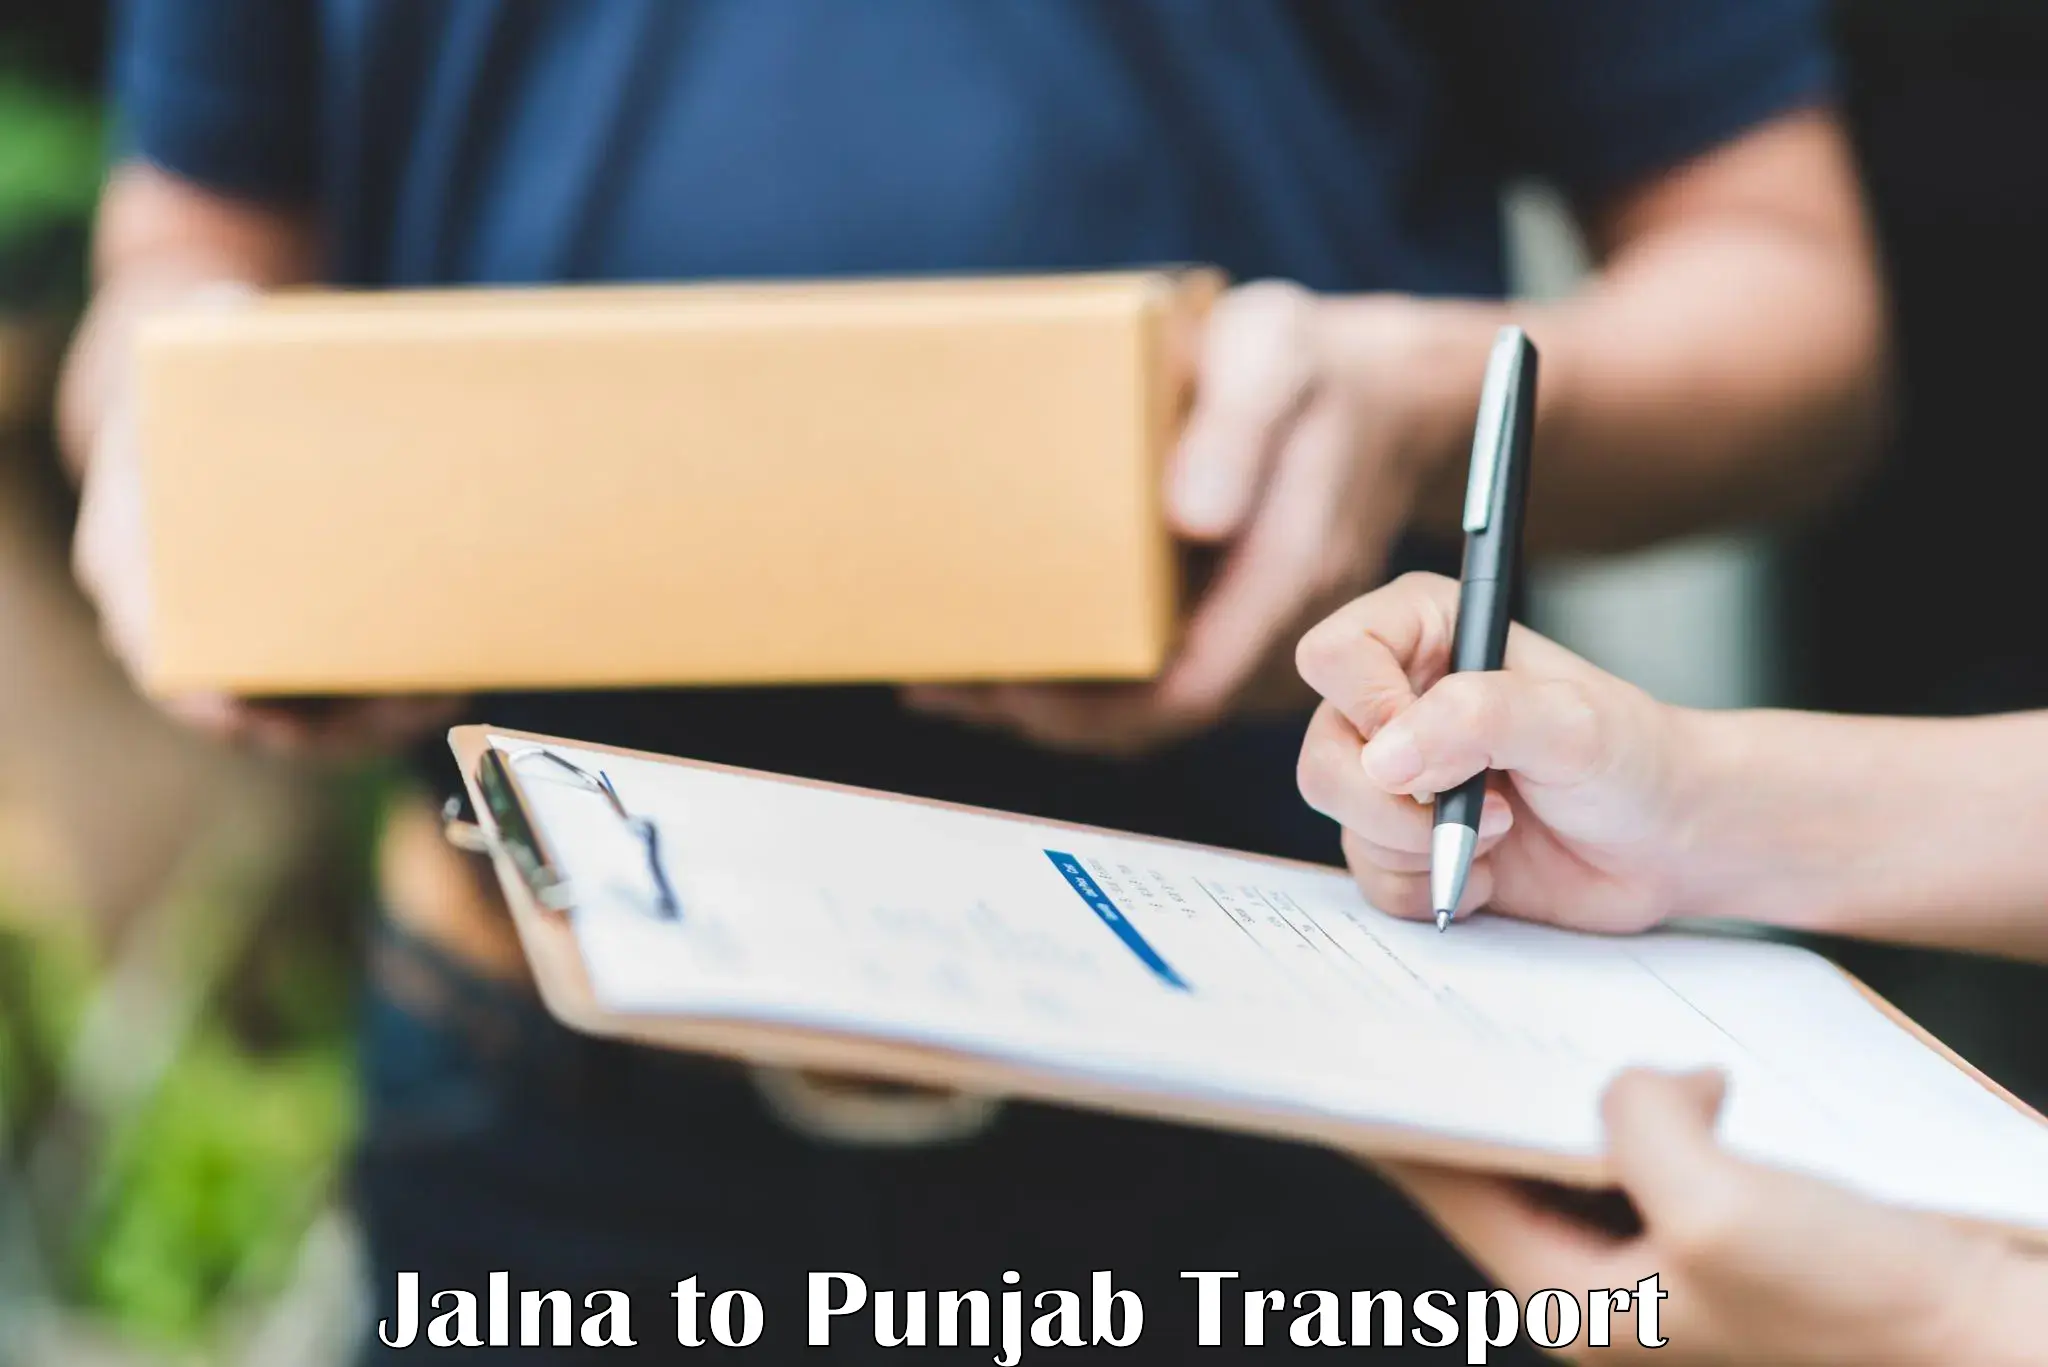 Online transport service Jalna to Kapurthala